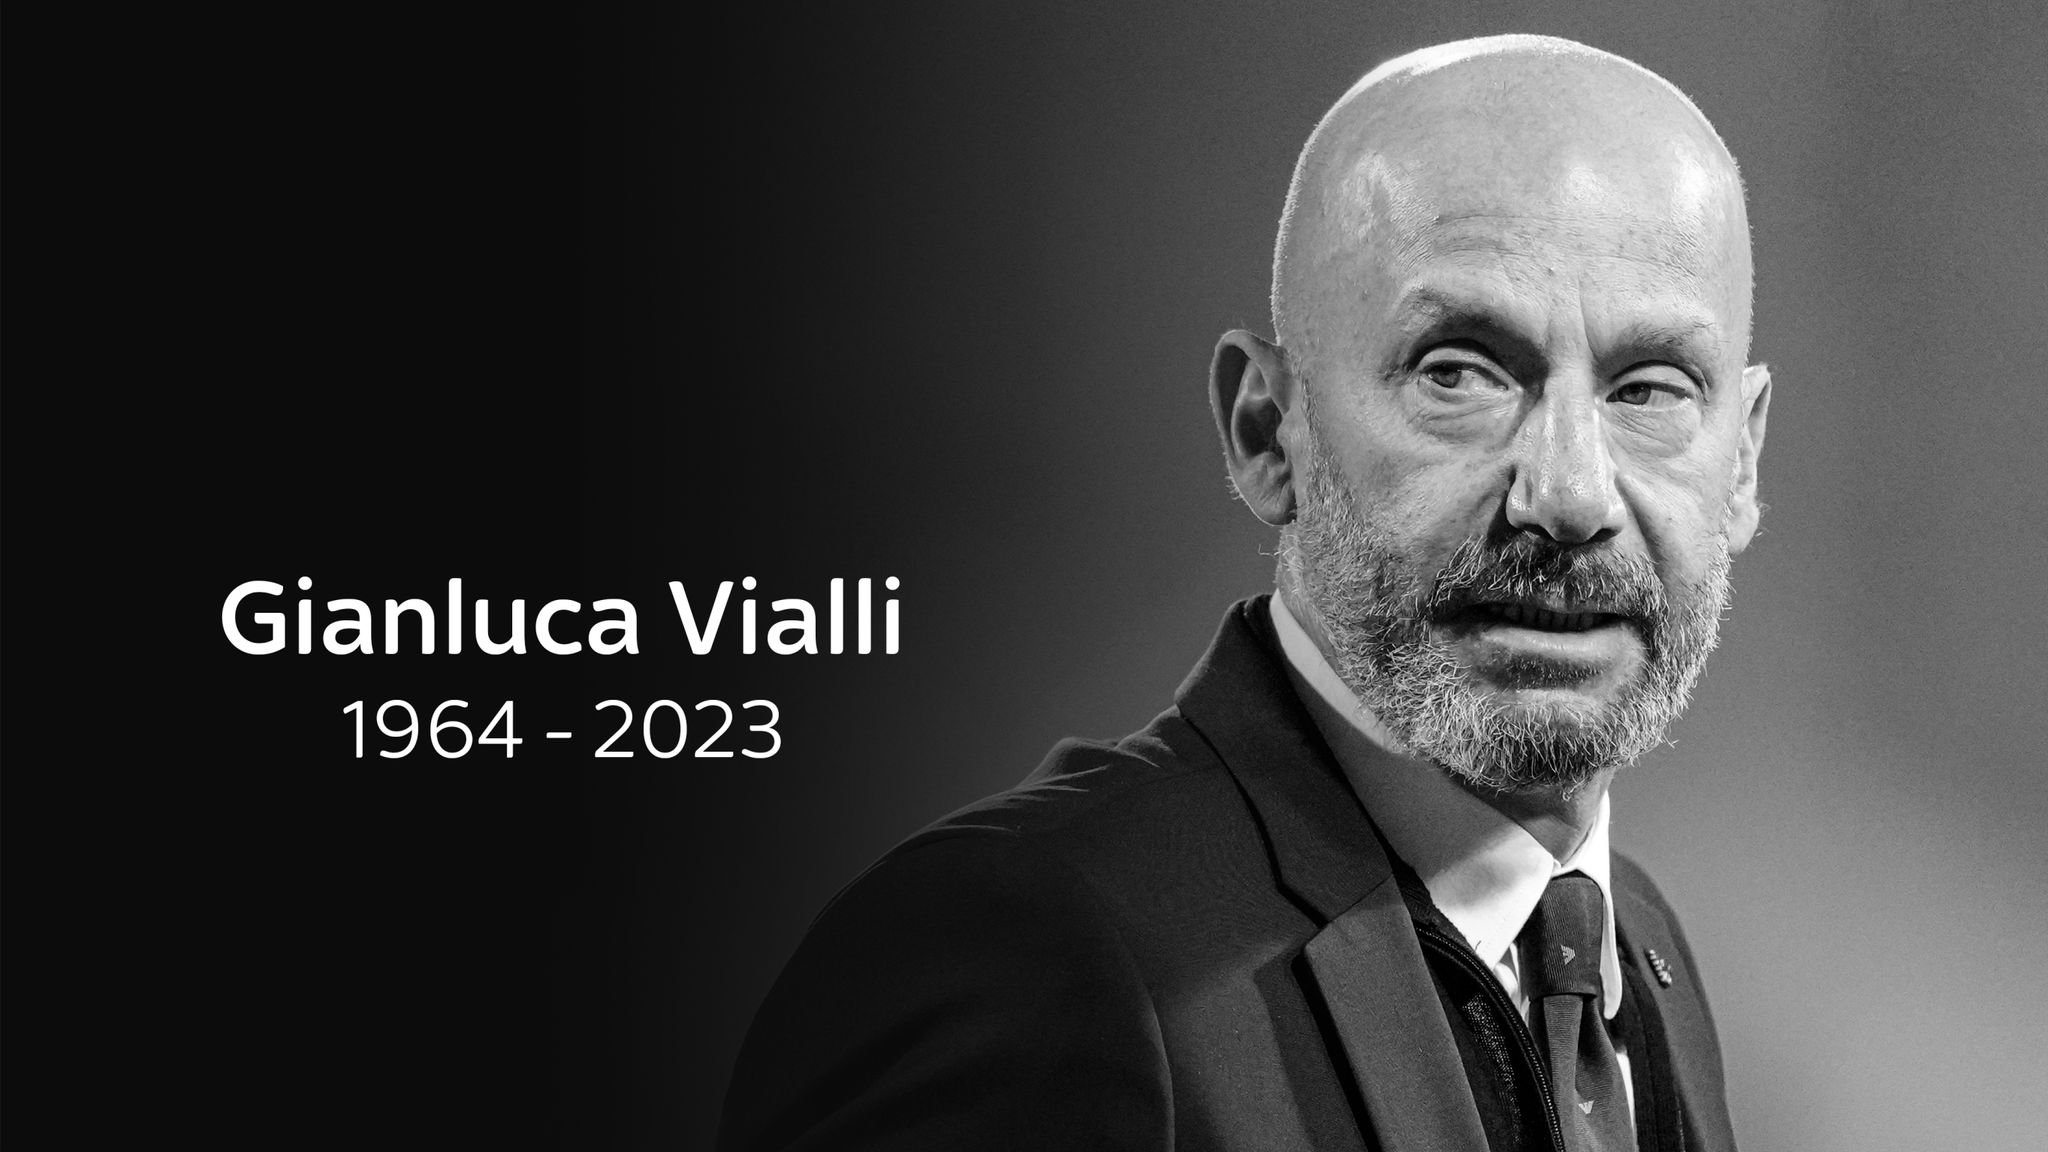 Former Italy, Juventus and Chelsea striker Gianluca Vialli dies aged 58